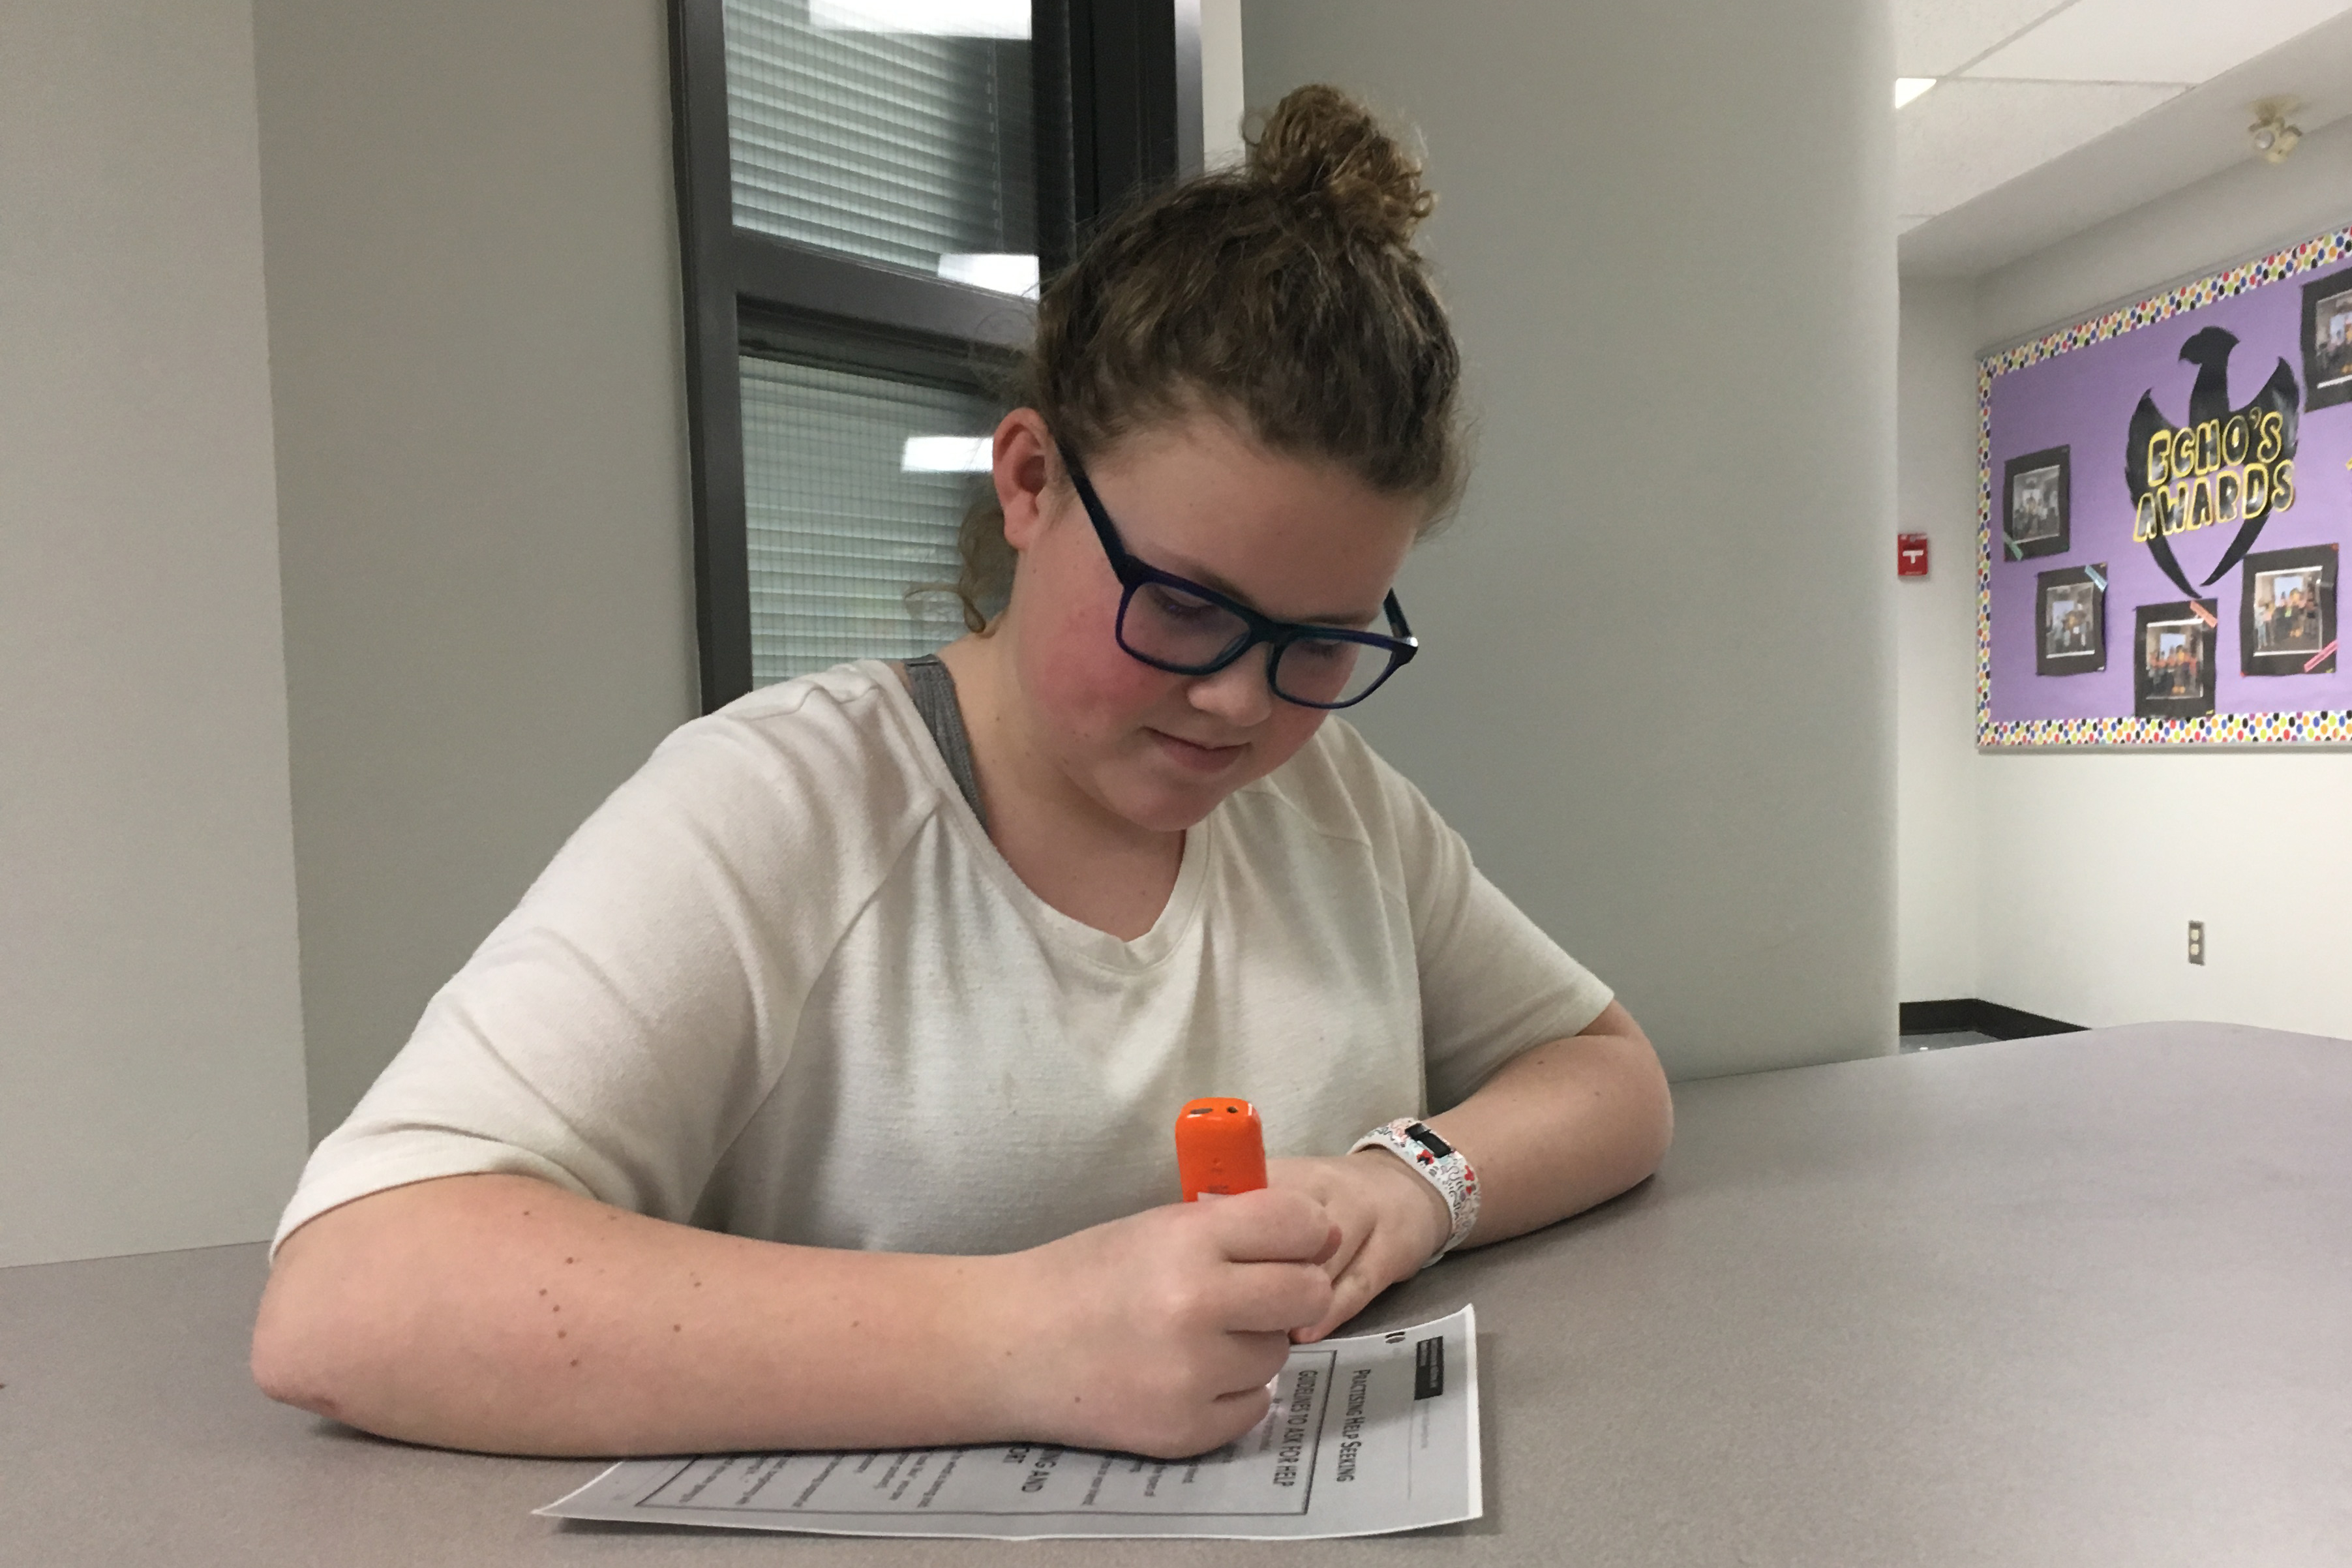 Student demonstrates a reader pen